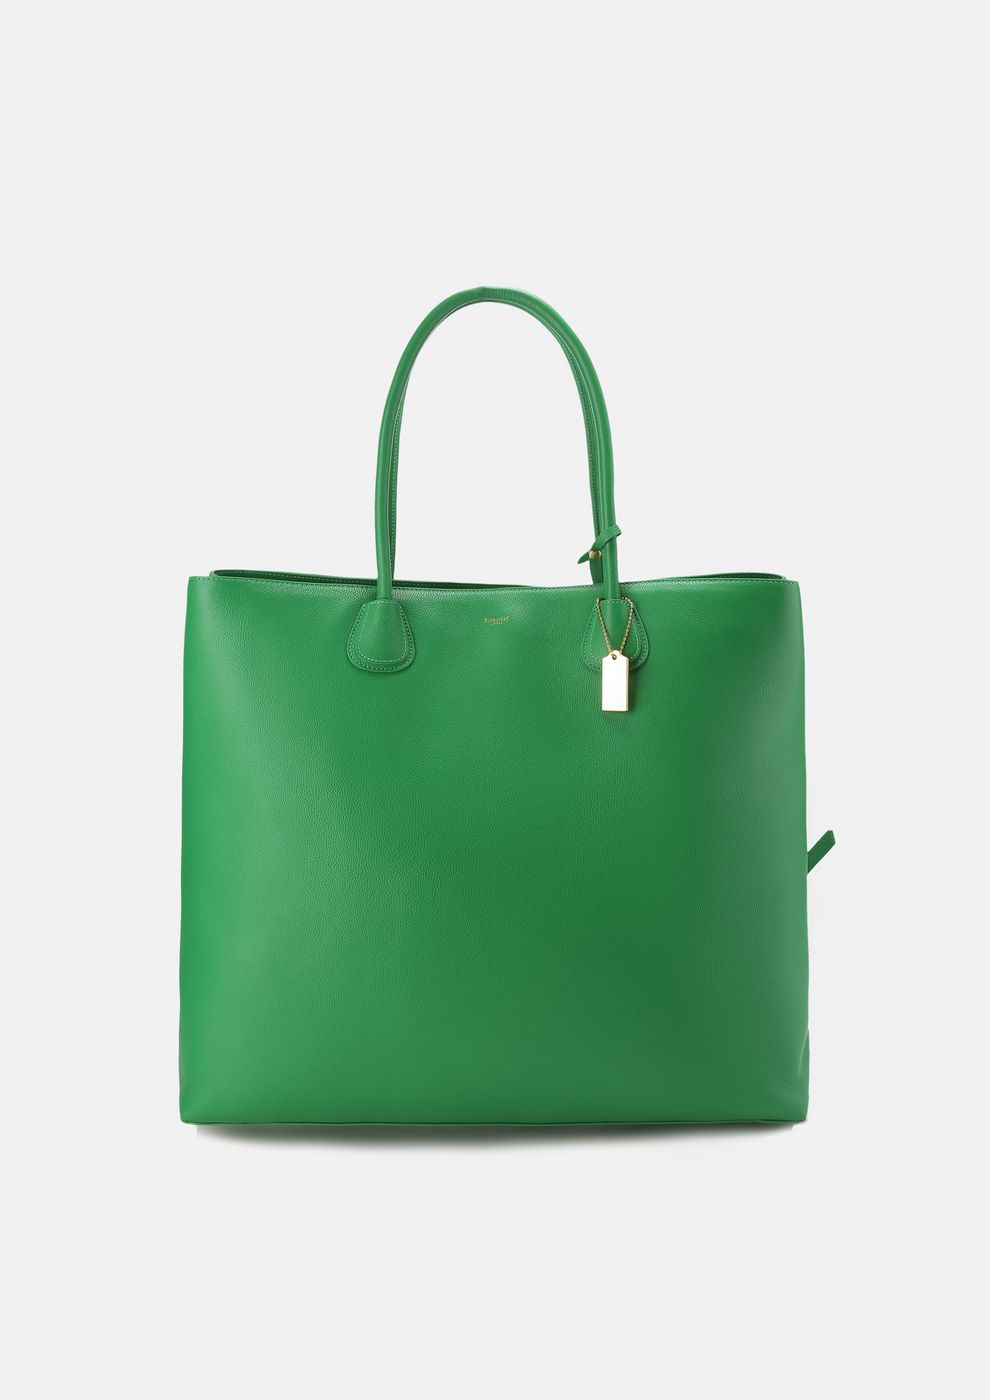 Handbags – Moncrief